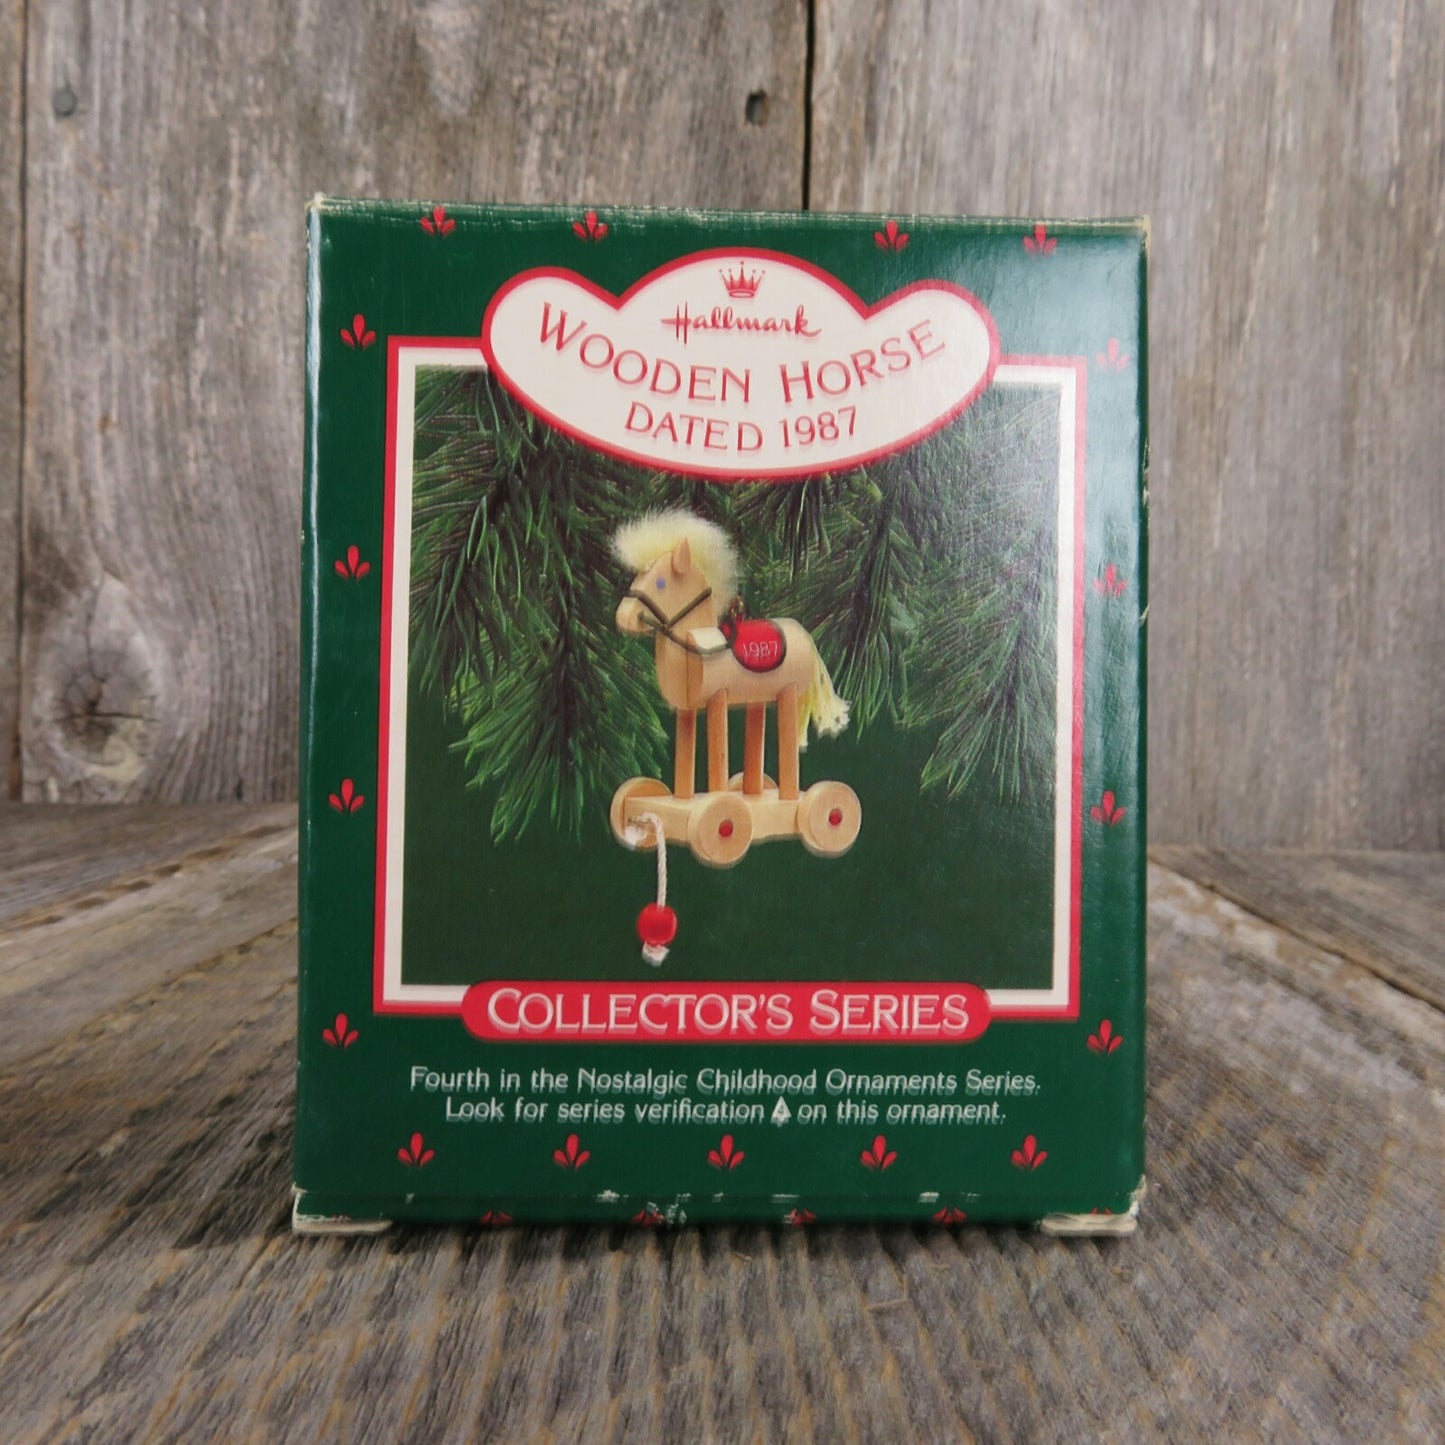 Vintage Wooden Horse Hallmark Keepsake Christmas Tree Ornament 1987 Collector - At Grandma's Table